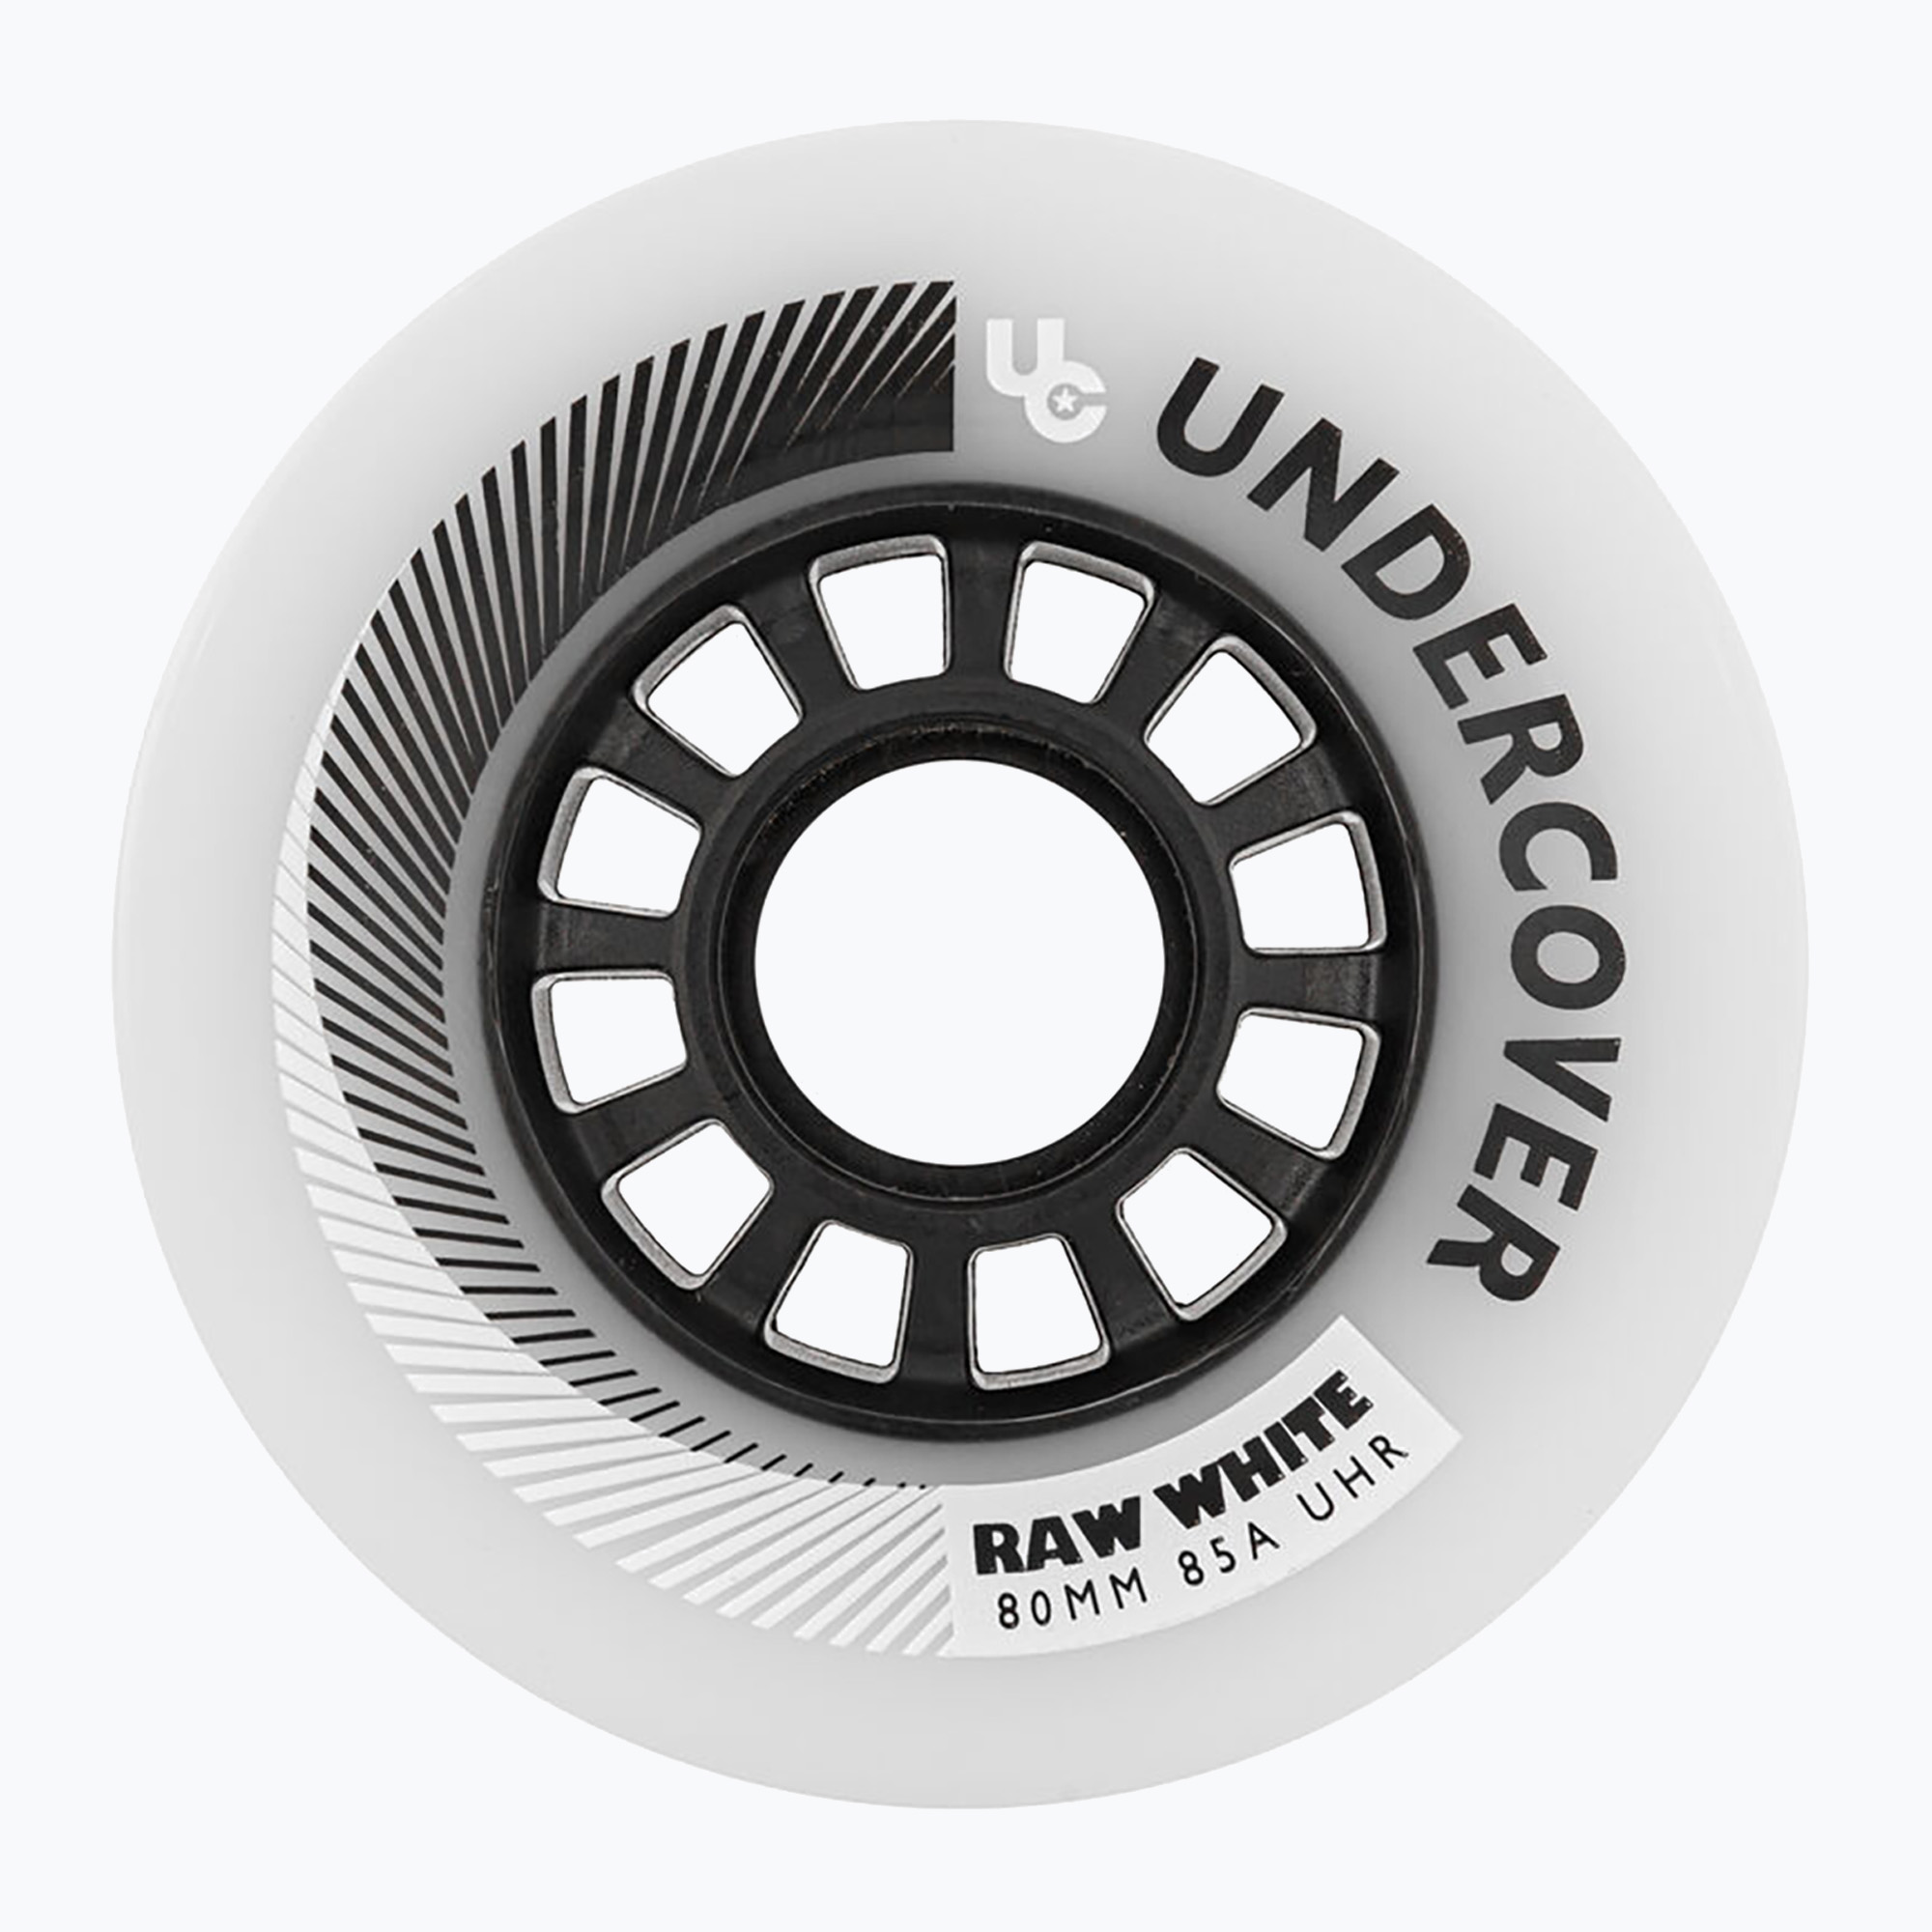 Roți pentru role UNDERCOVER WHEELS Raw 80 mm/85A 4 buc. white